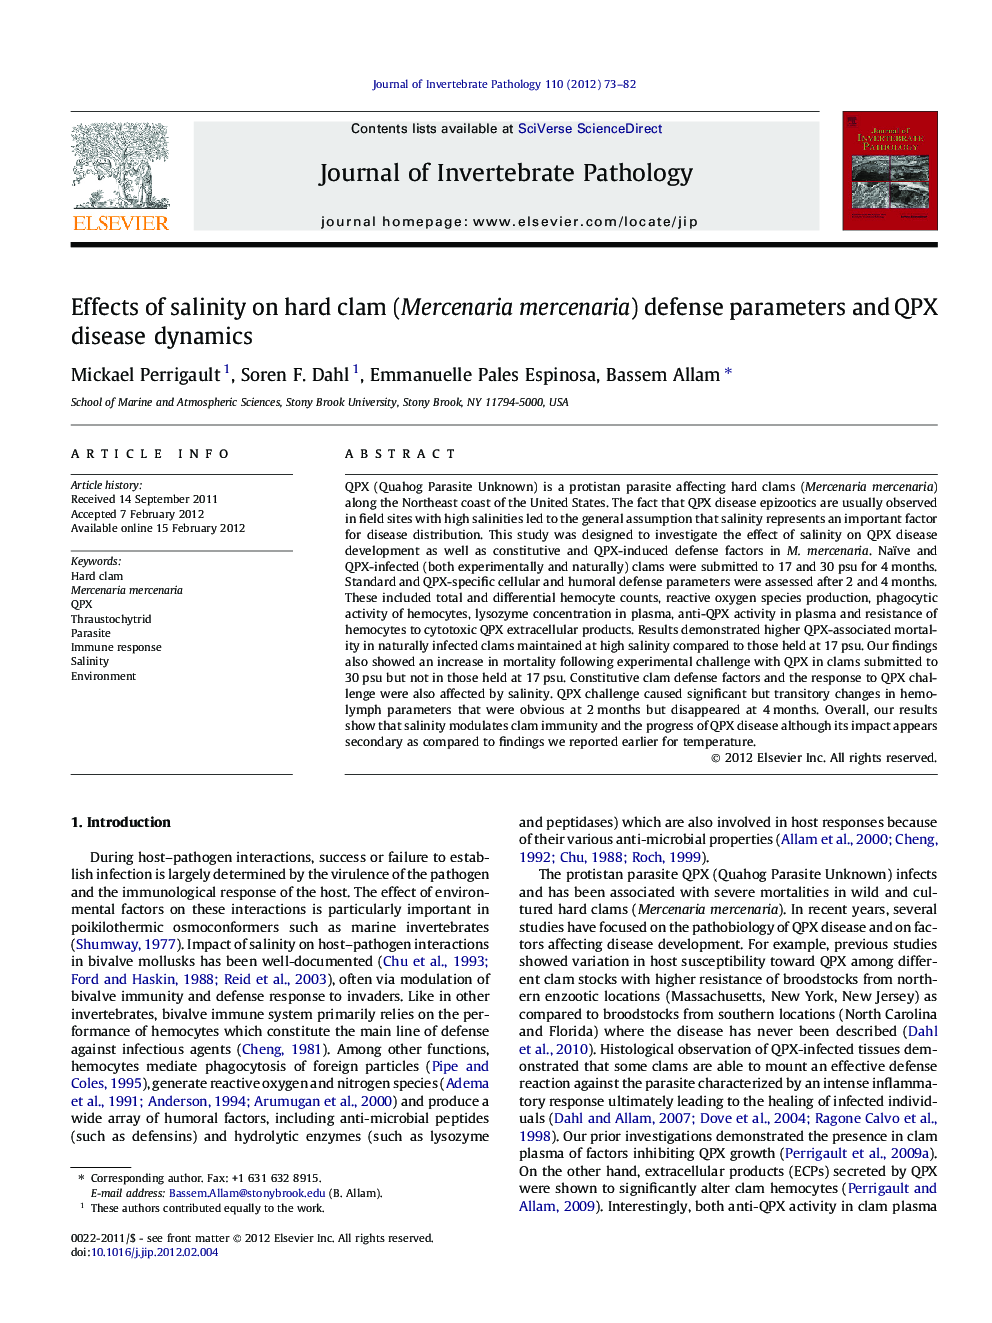 Effects of salinity on hard clam (Mercenaria mercenaria) defense parameters and QPX disease dynamics